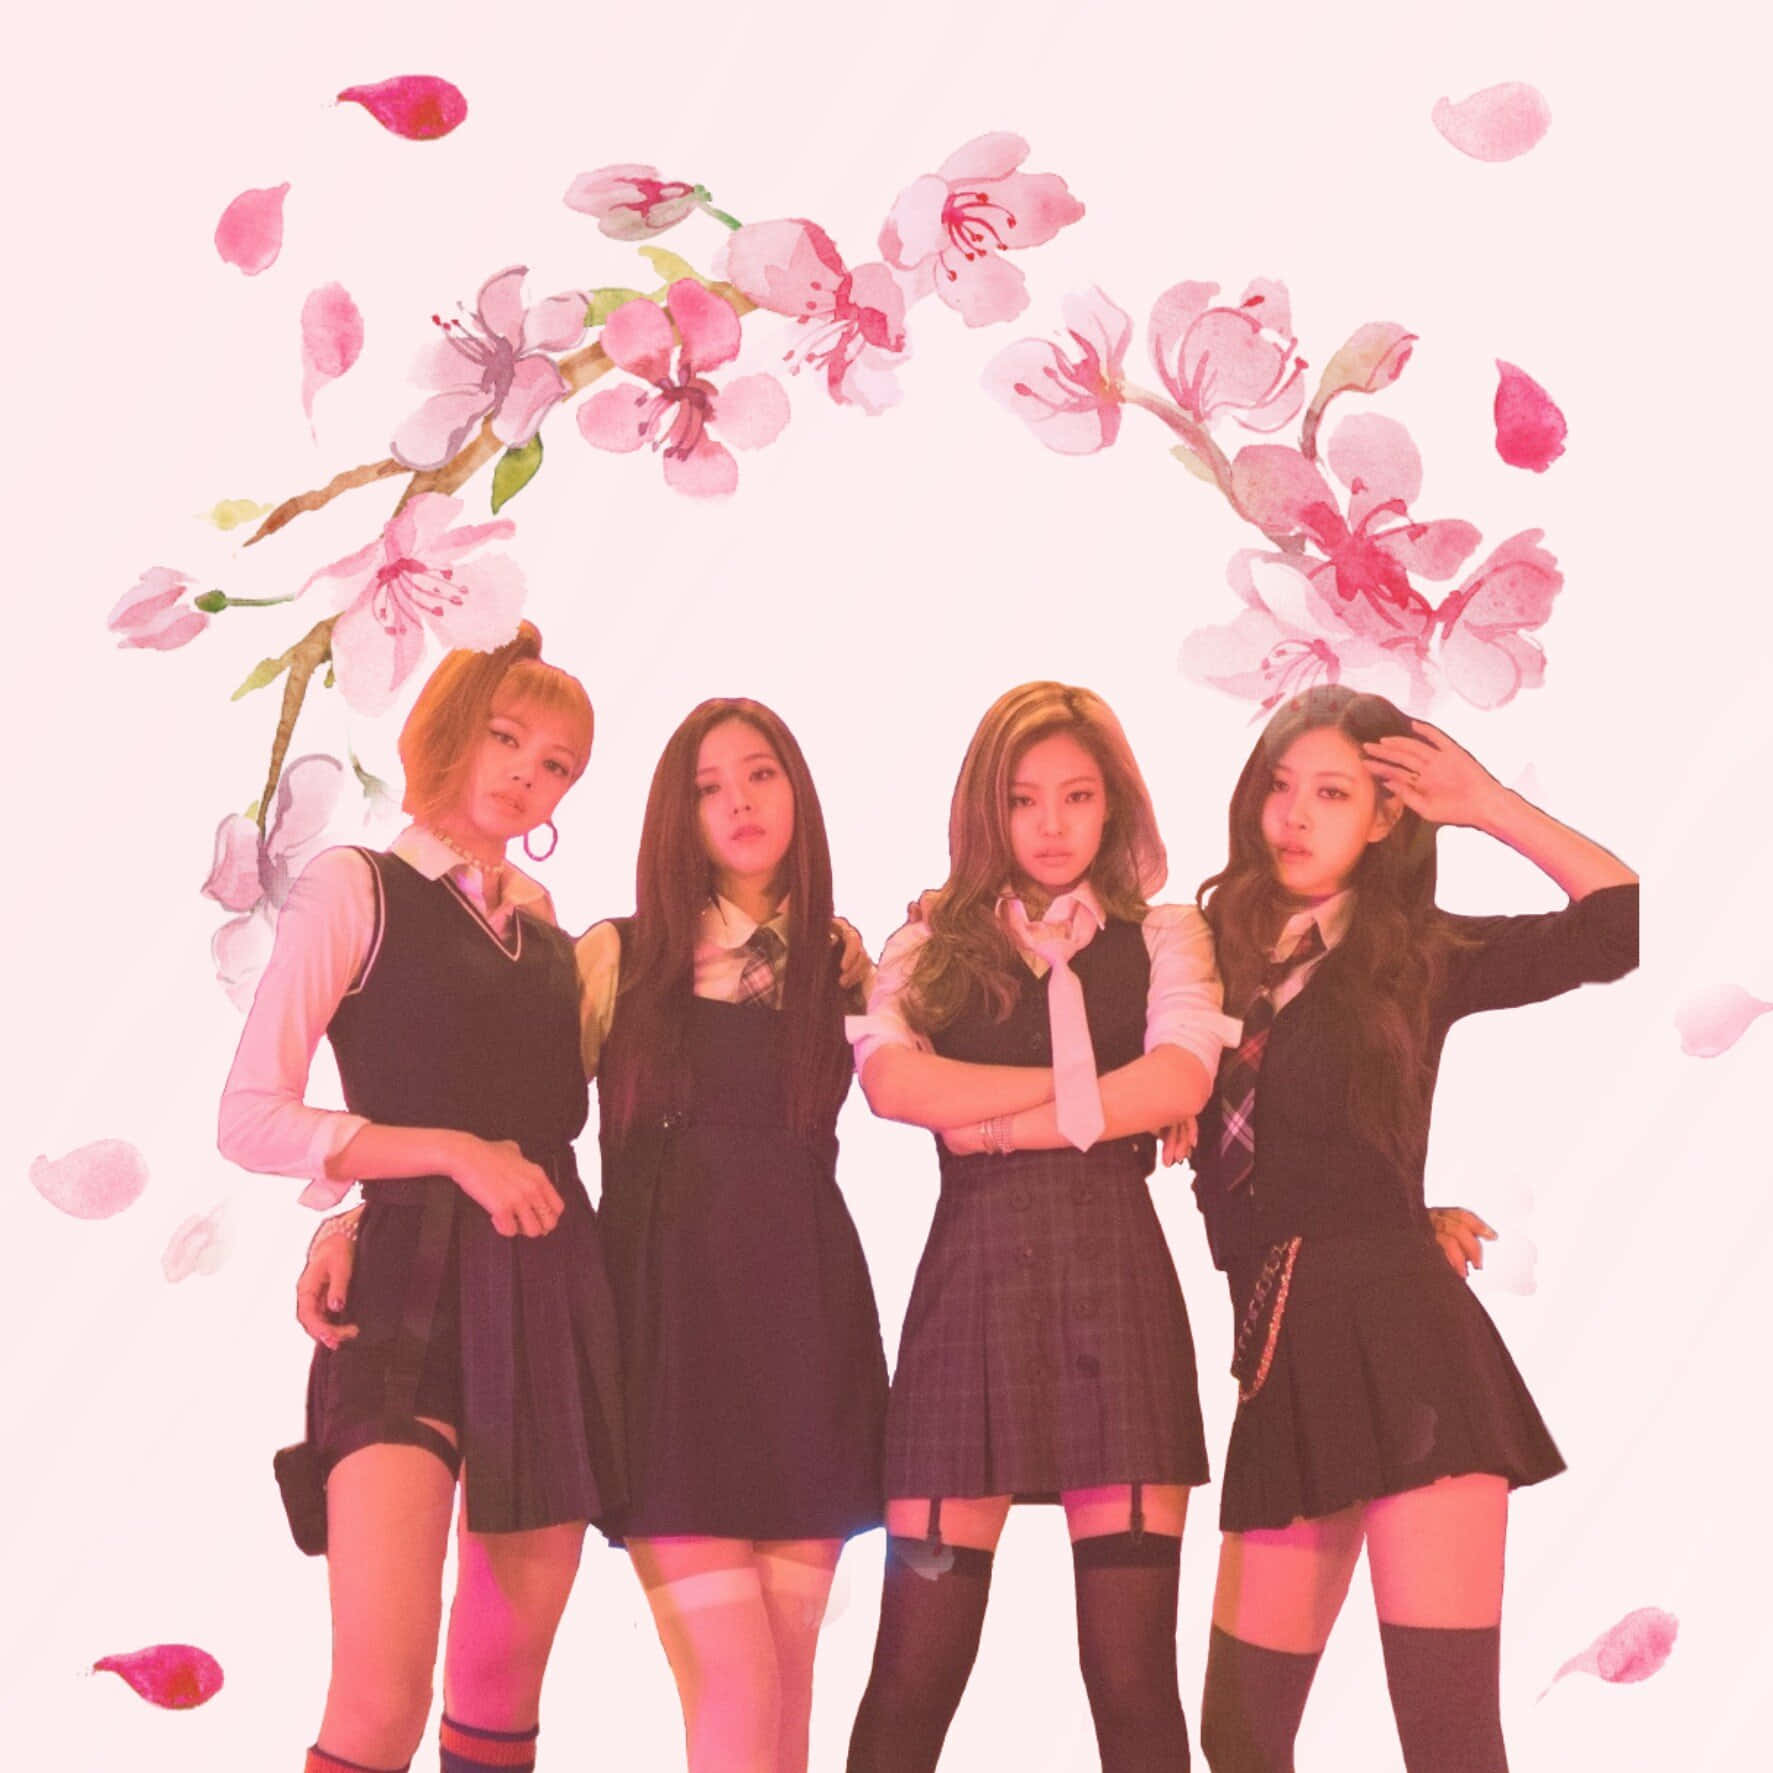 Cute Kpop Kawaii Wallpaper featuring Female K-pop Idols Wallpaper